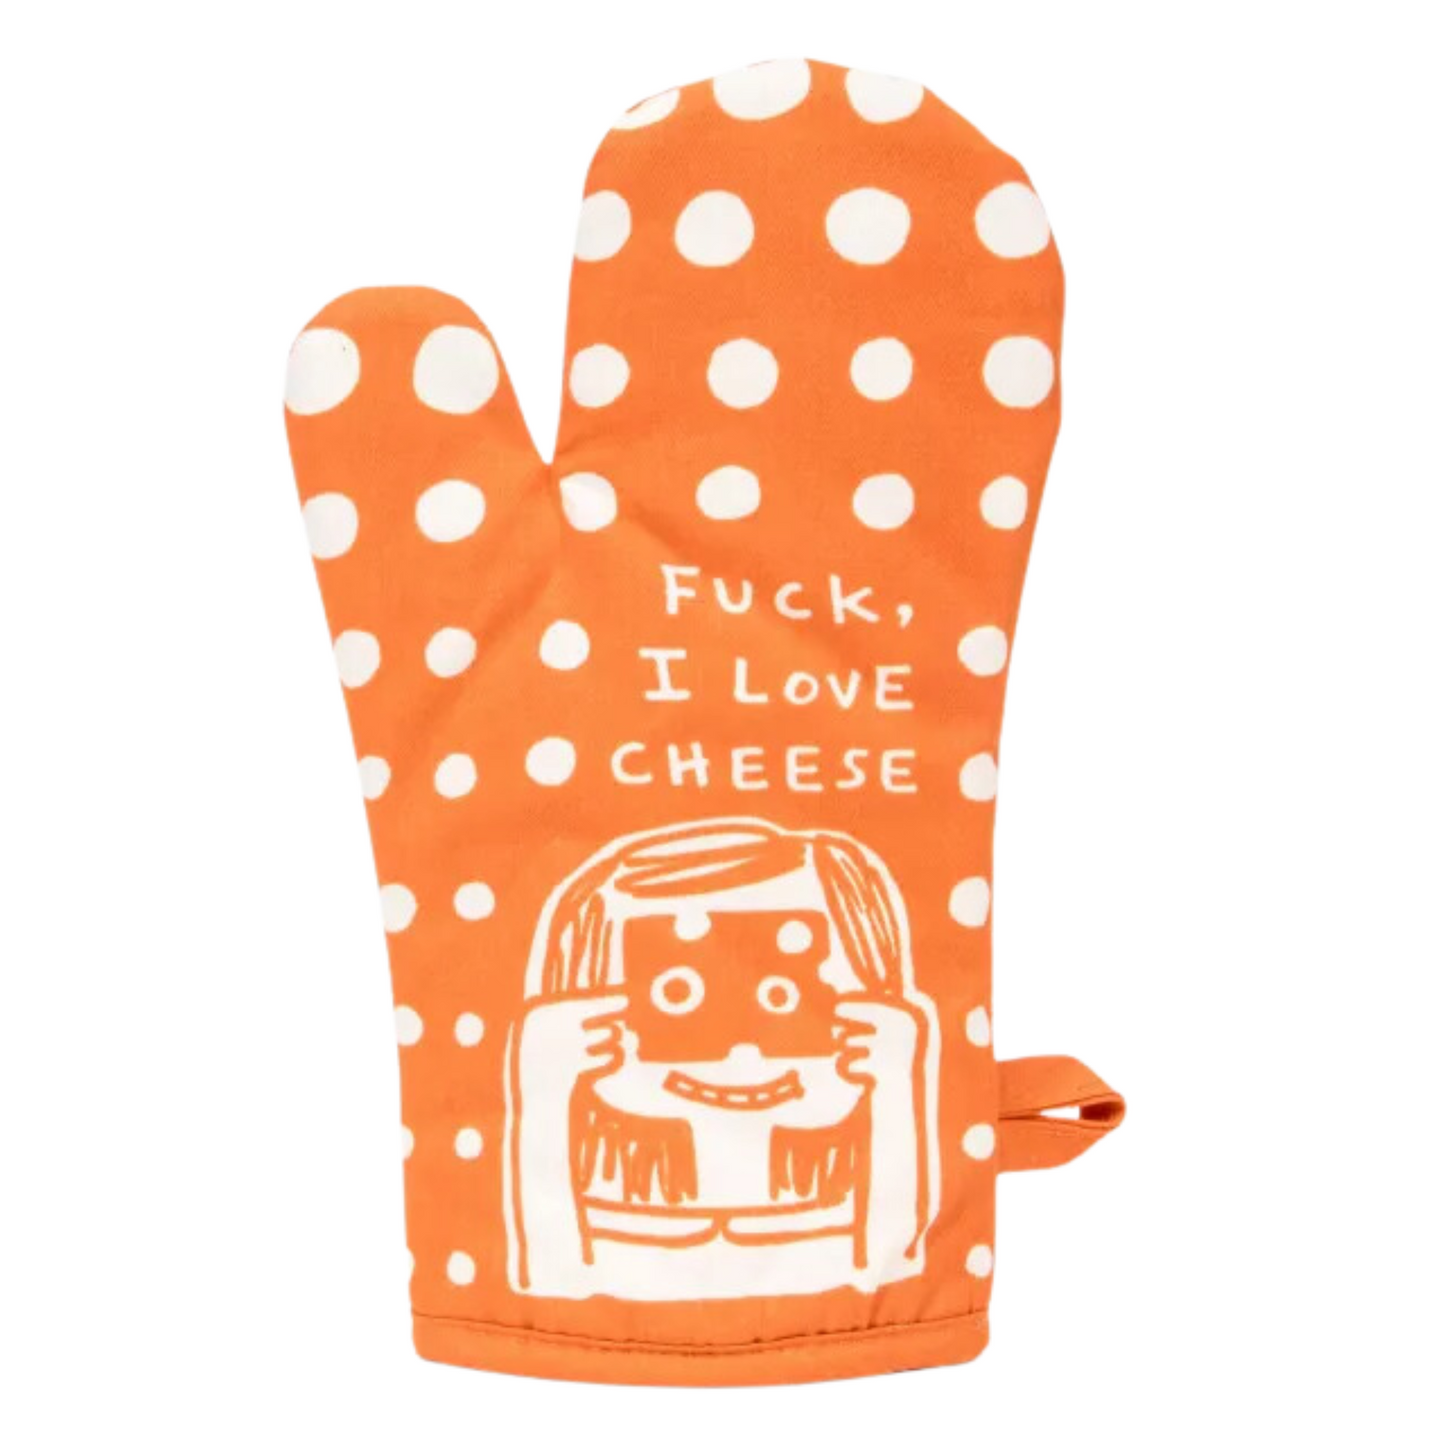 "Fuck, I Love Cheese" Oven Mitt